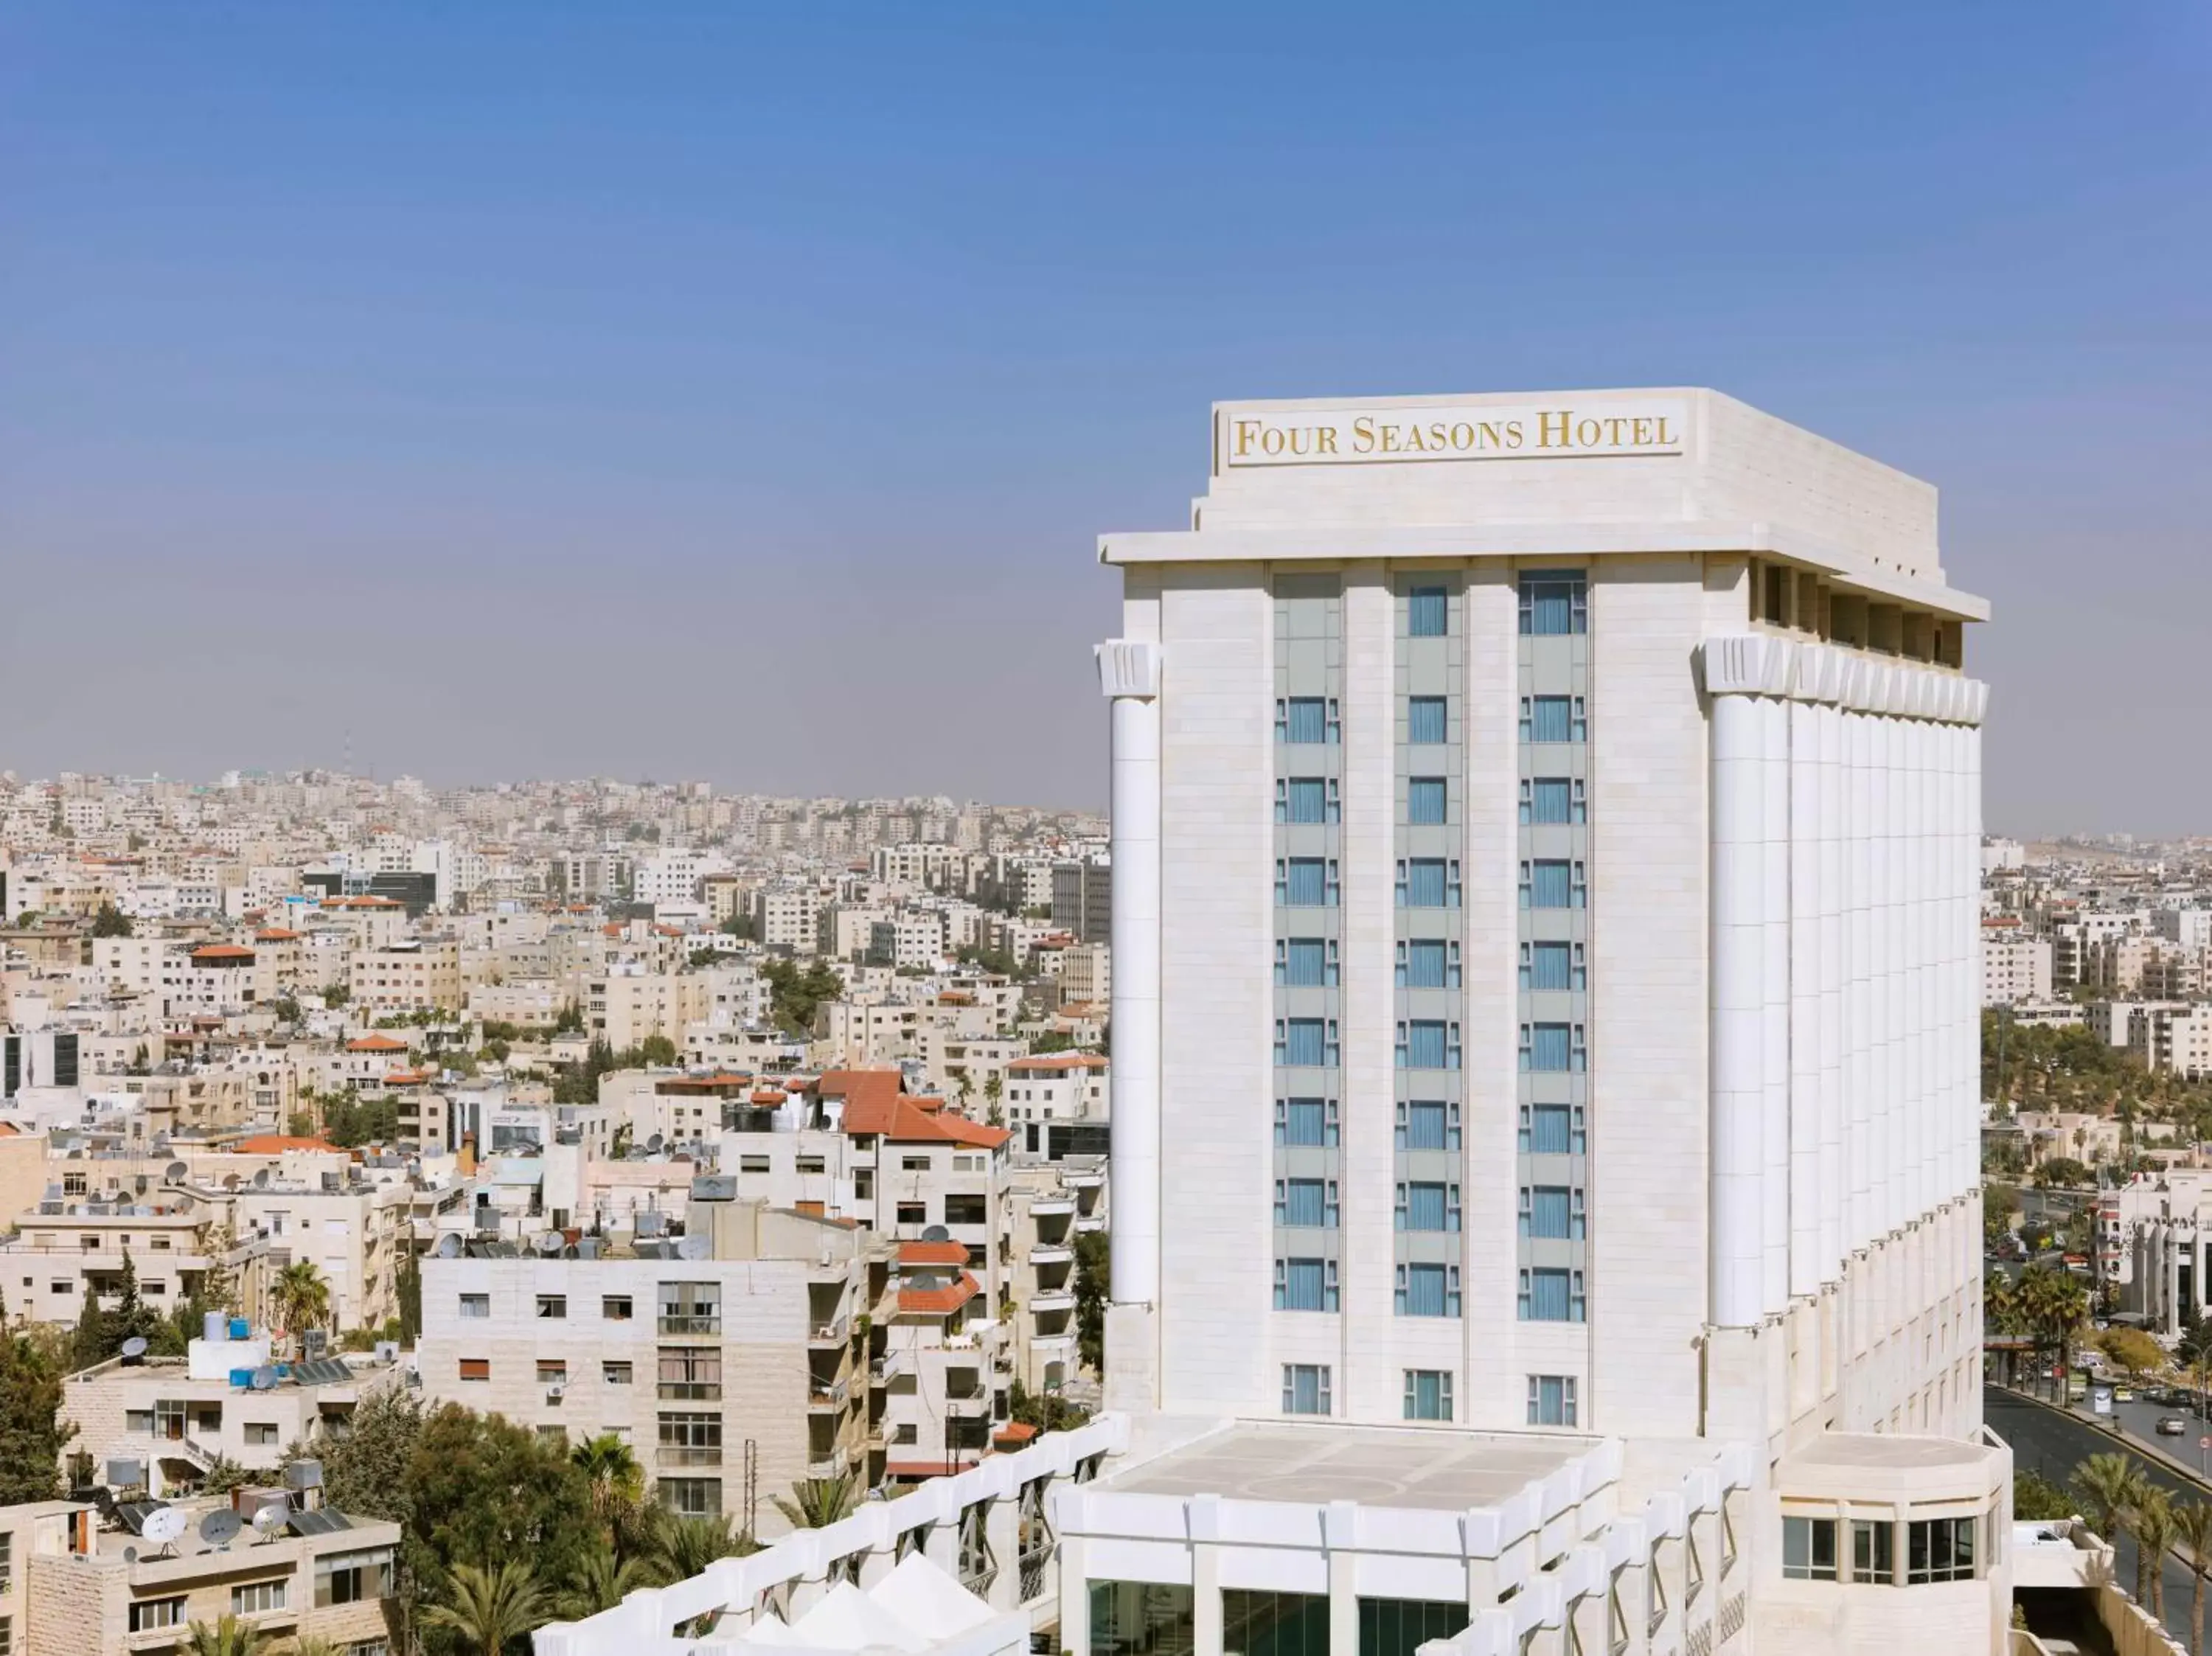 Bird's eye view in Four Seasons Hotel Amman